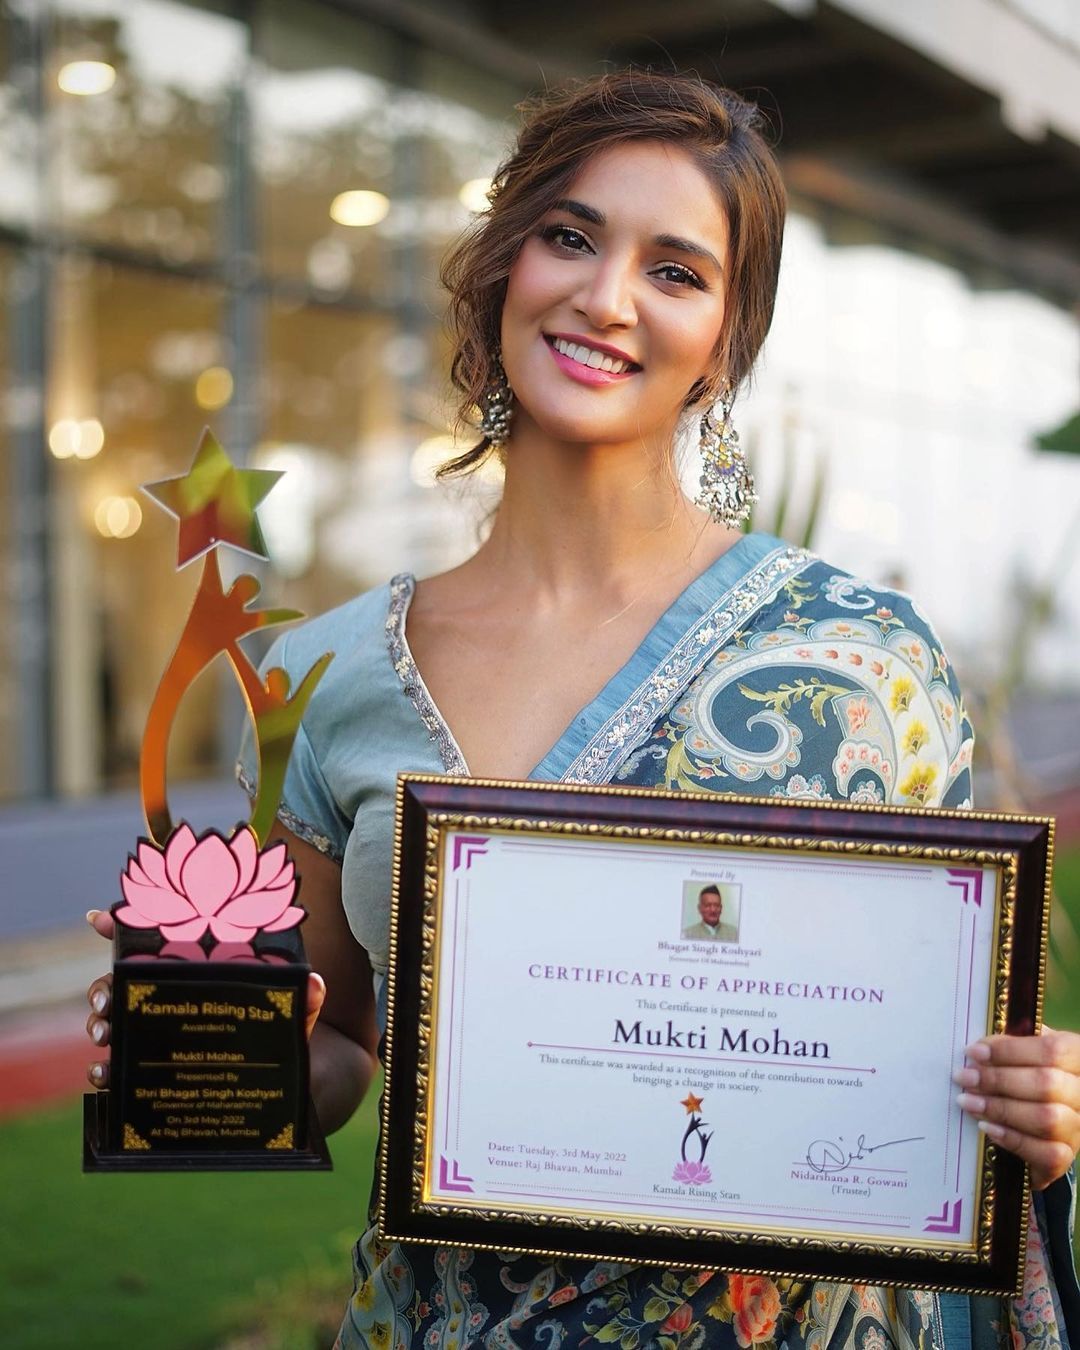 Mukti Mohan with her award